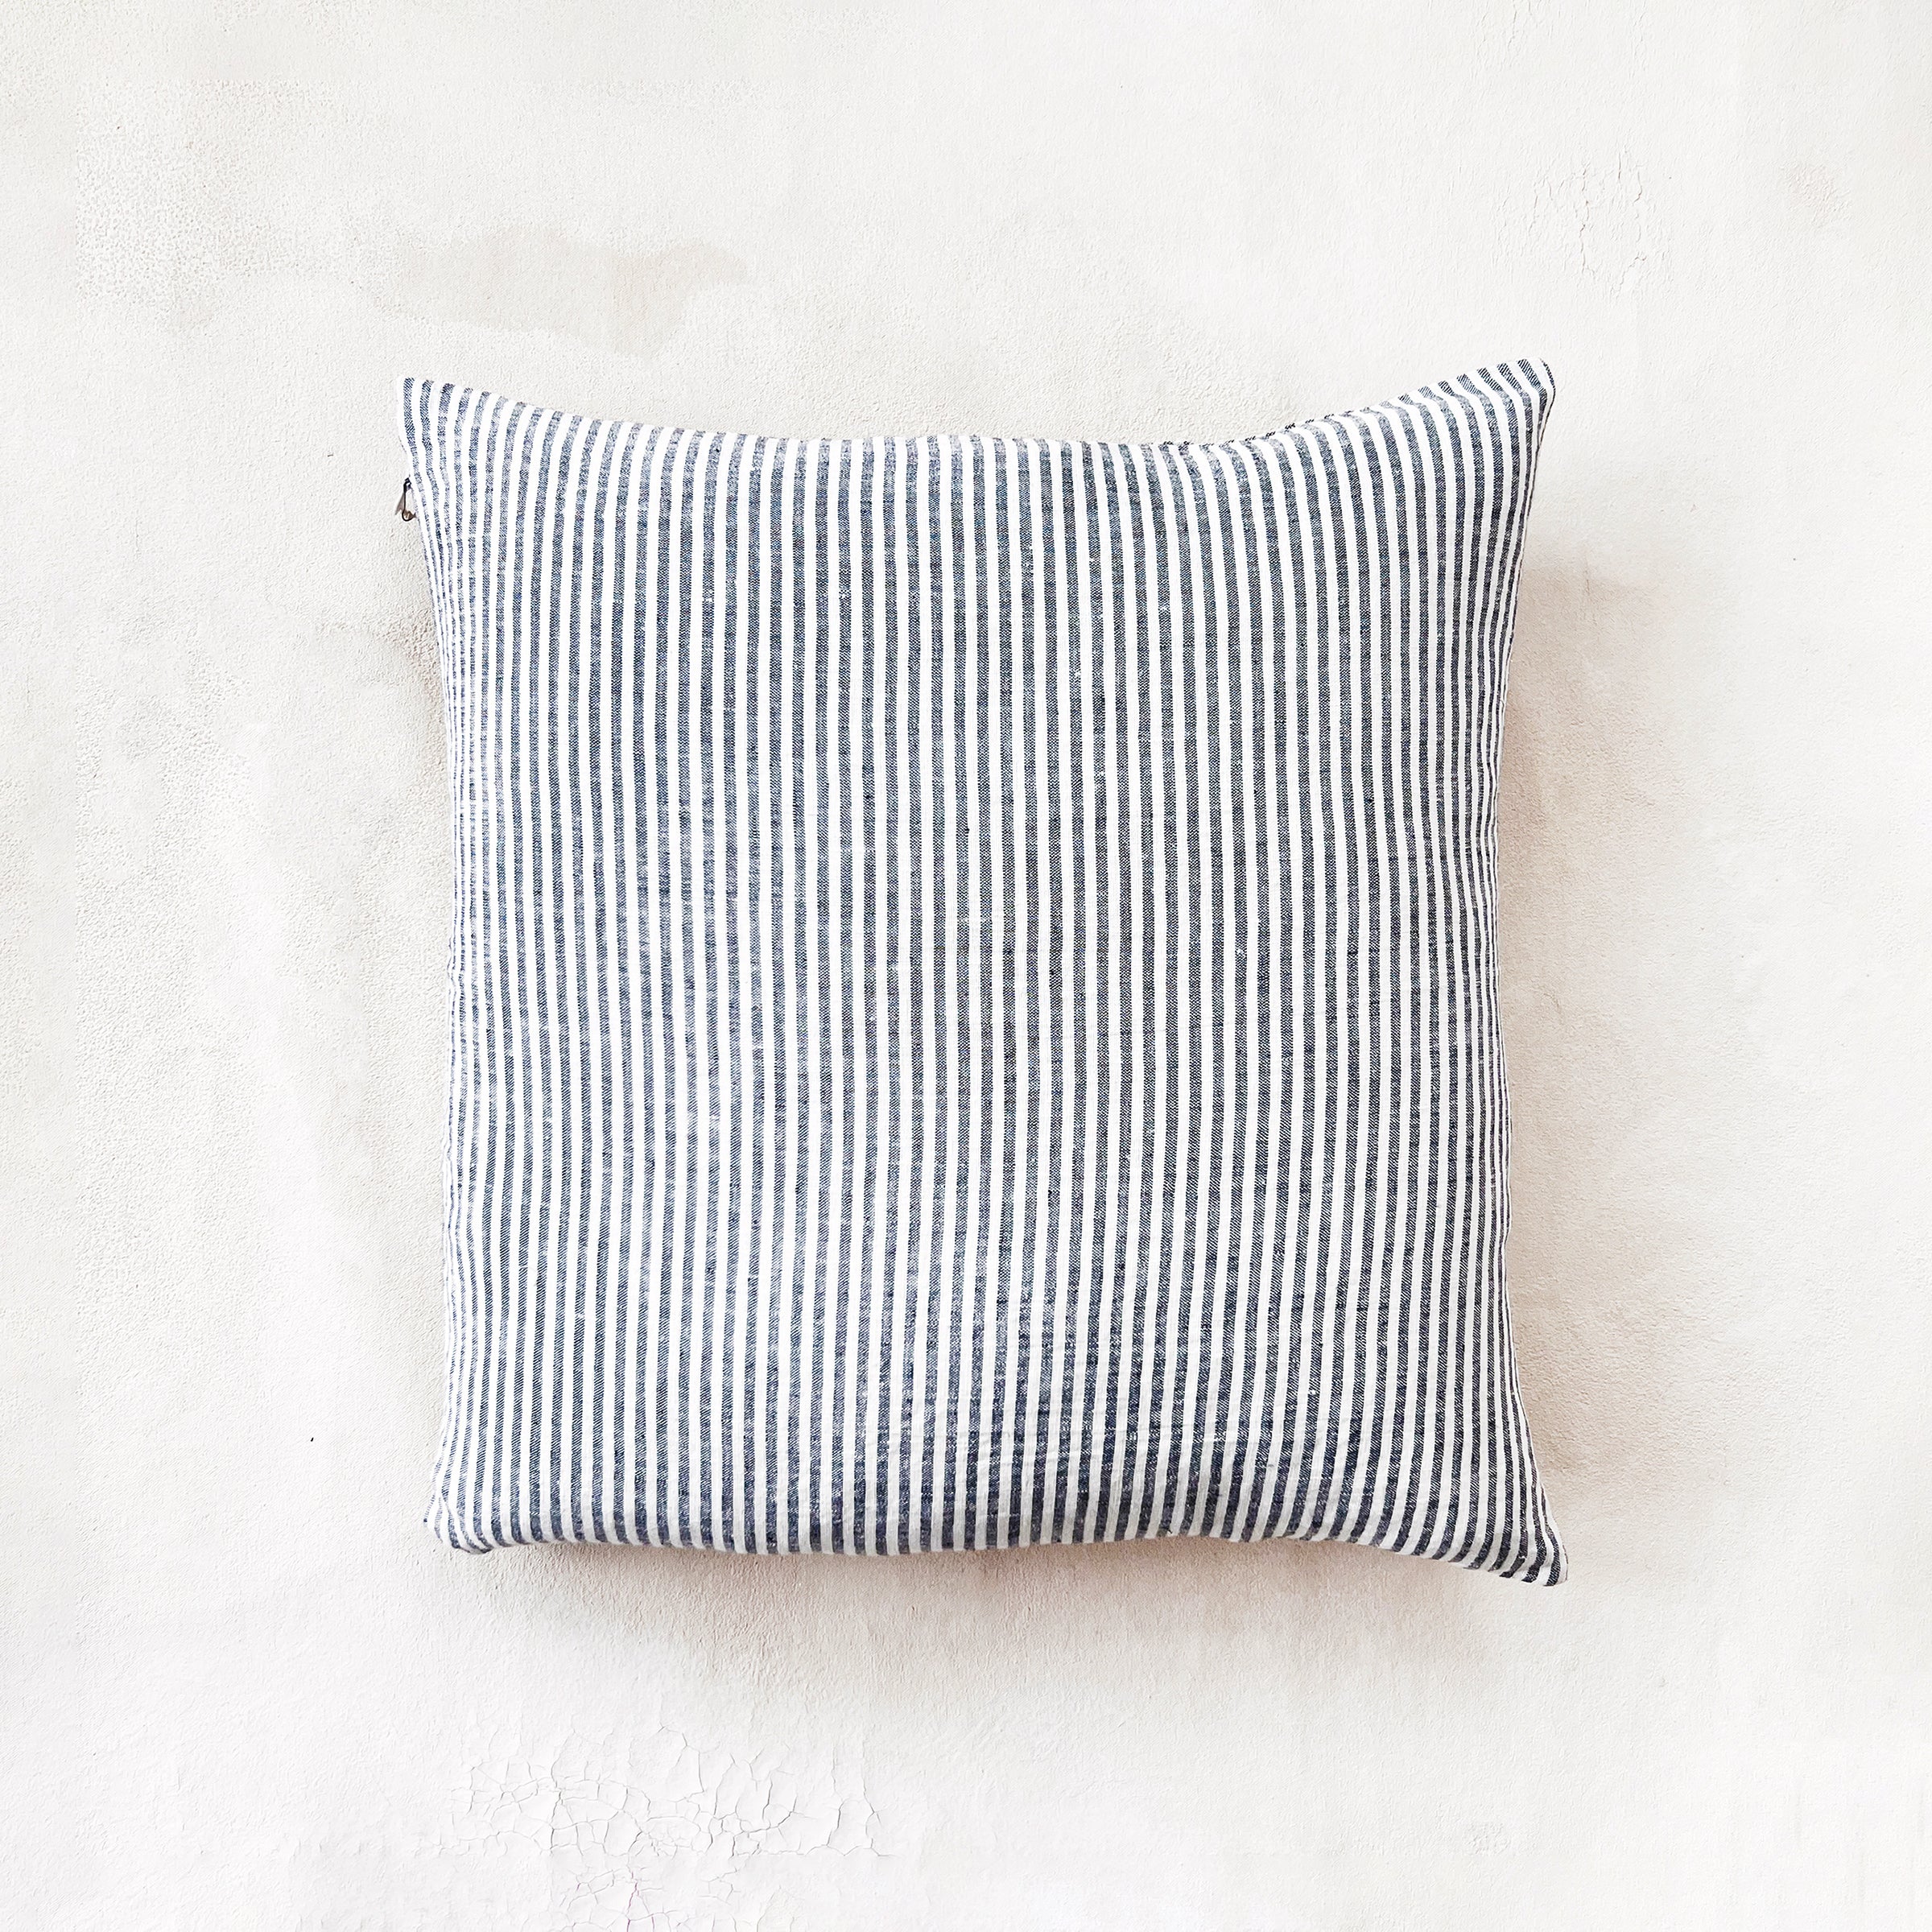 Linen Pillow in Thin Black Stripe